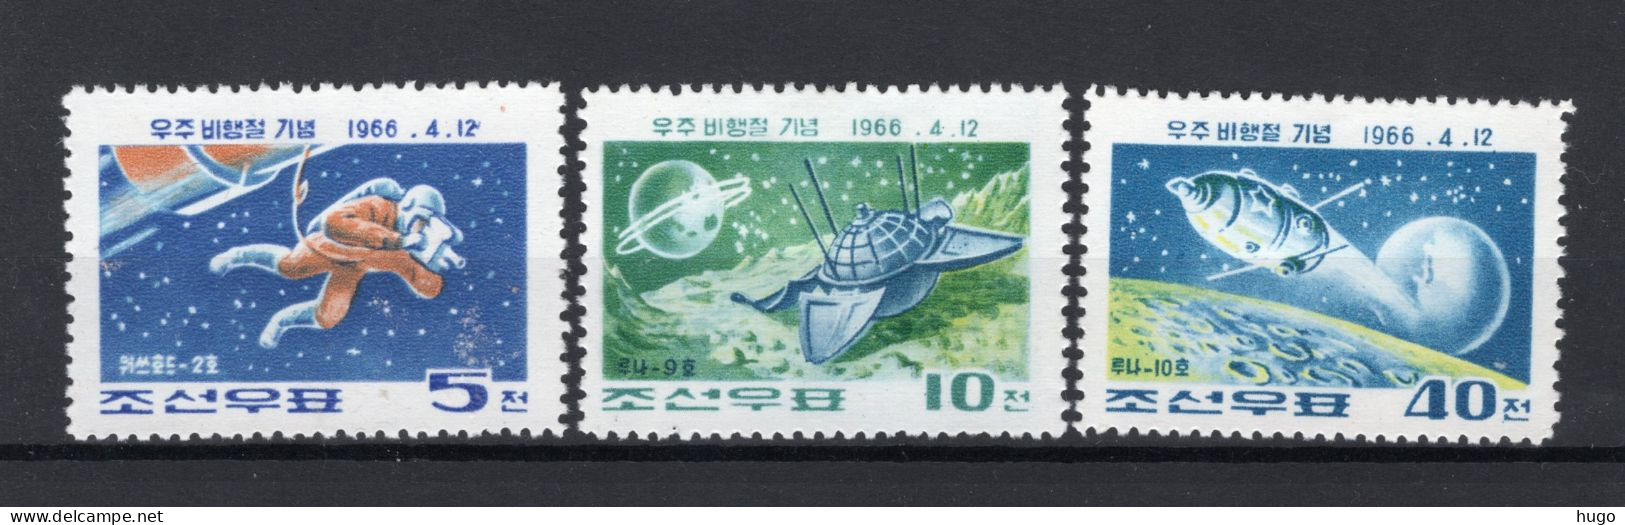 KOREA-NOORD  Yt. 708/710 MH 1966 - Korea (Nord-)